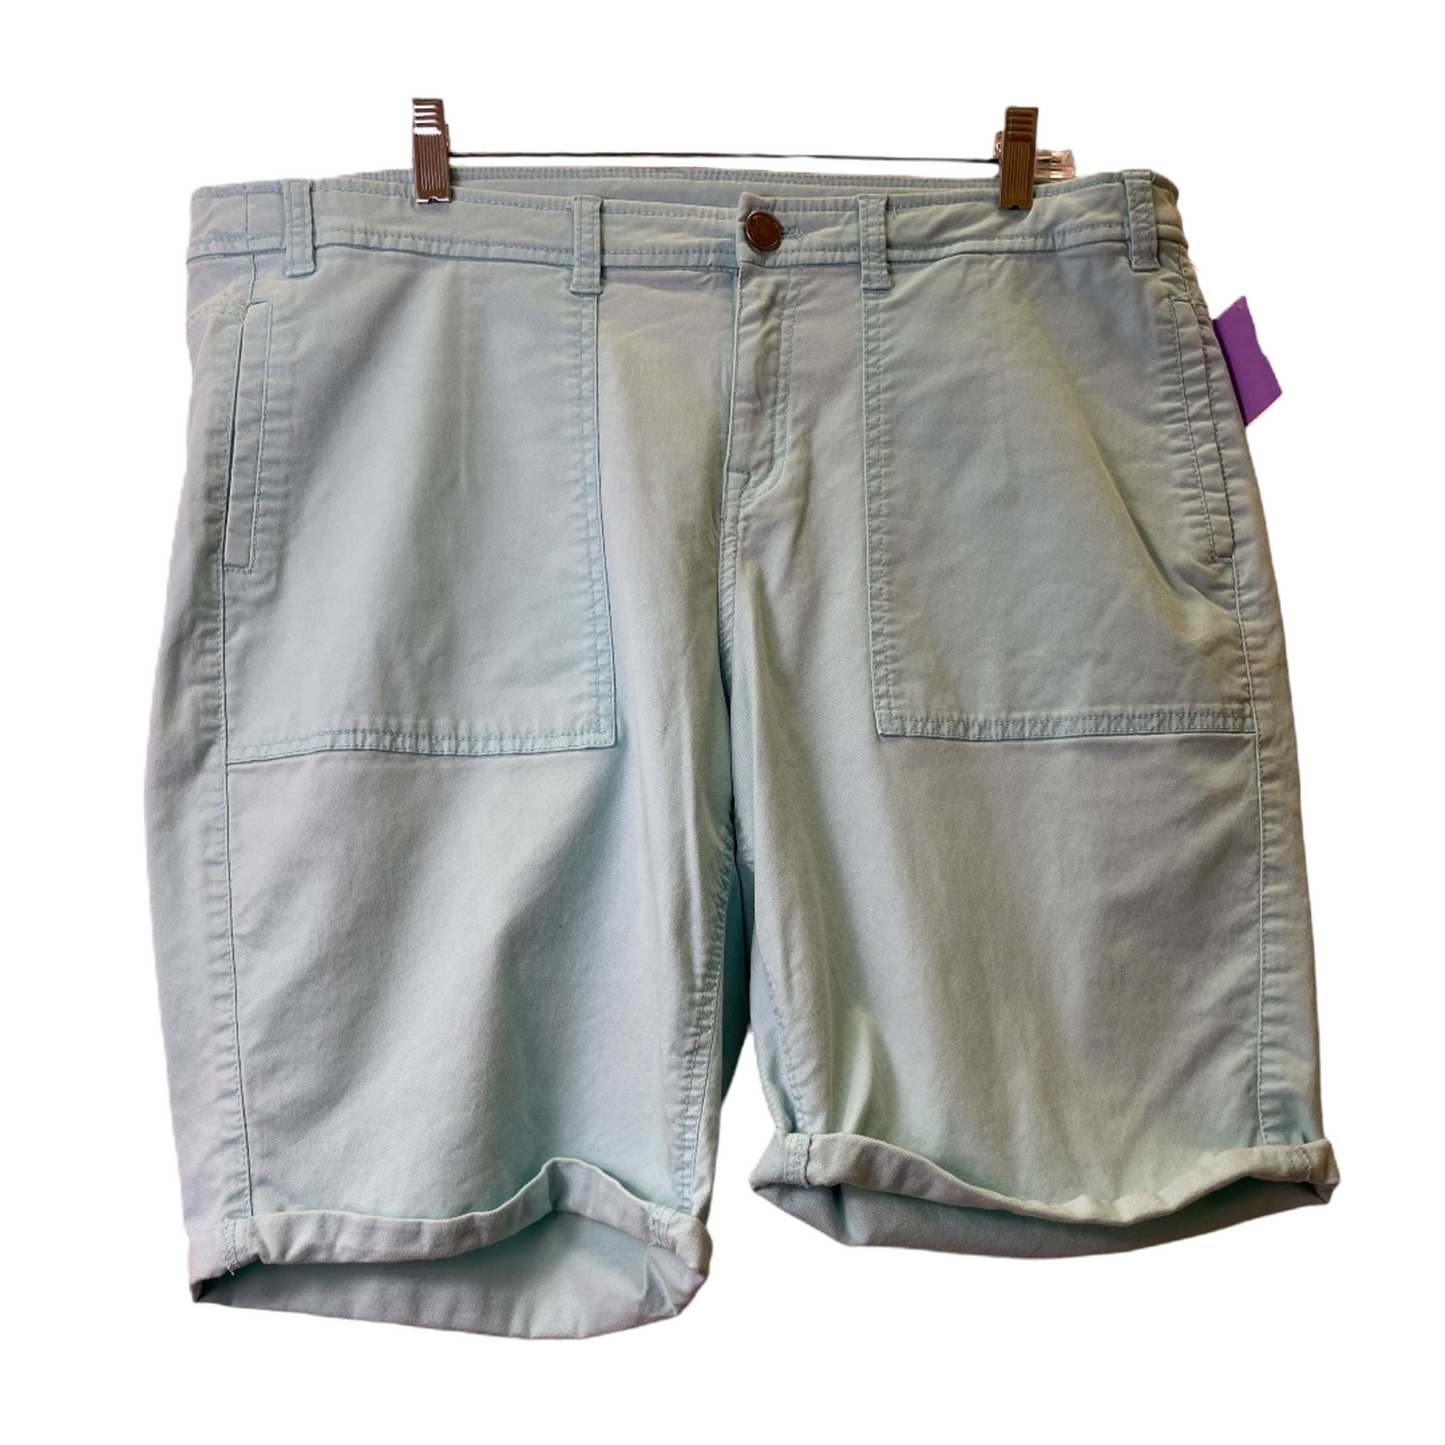 Blue Shorts By Lane Bryant, Size: 18